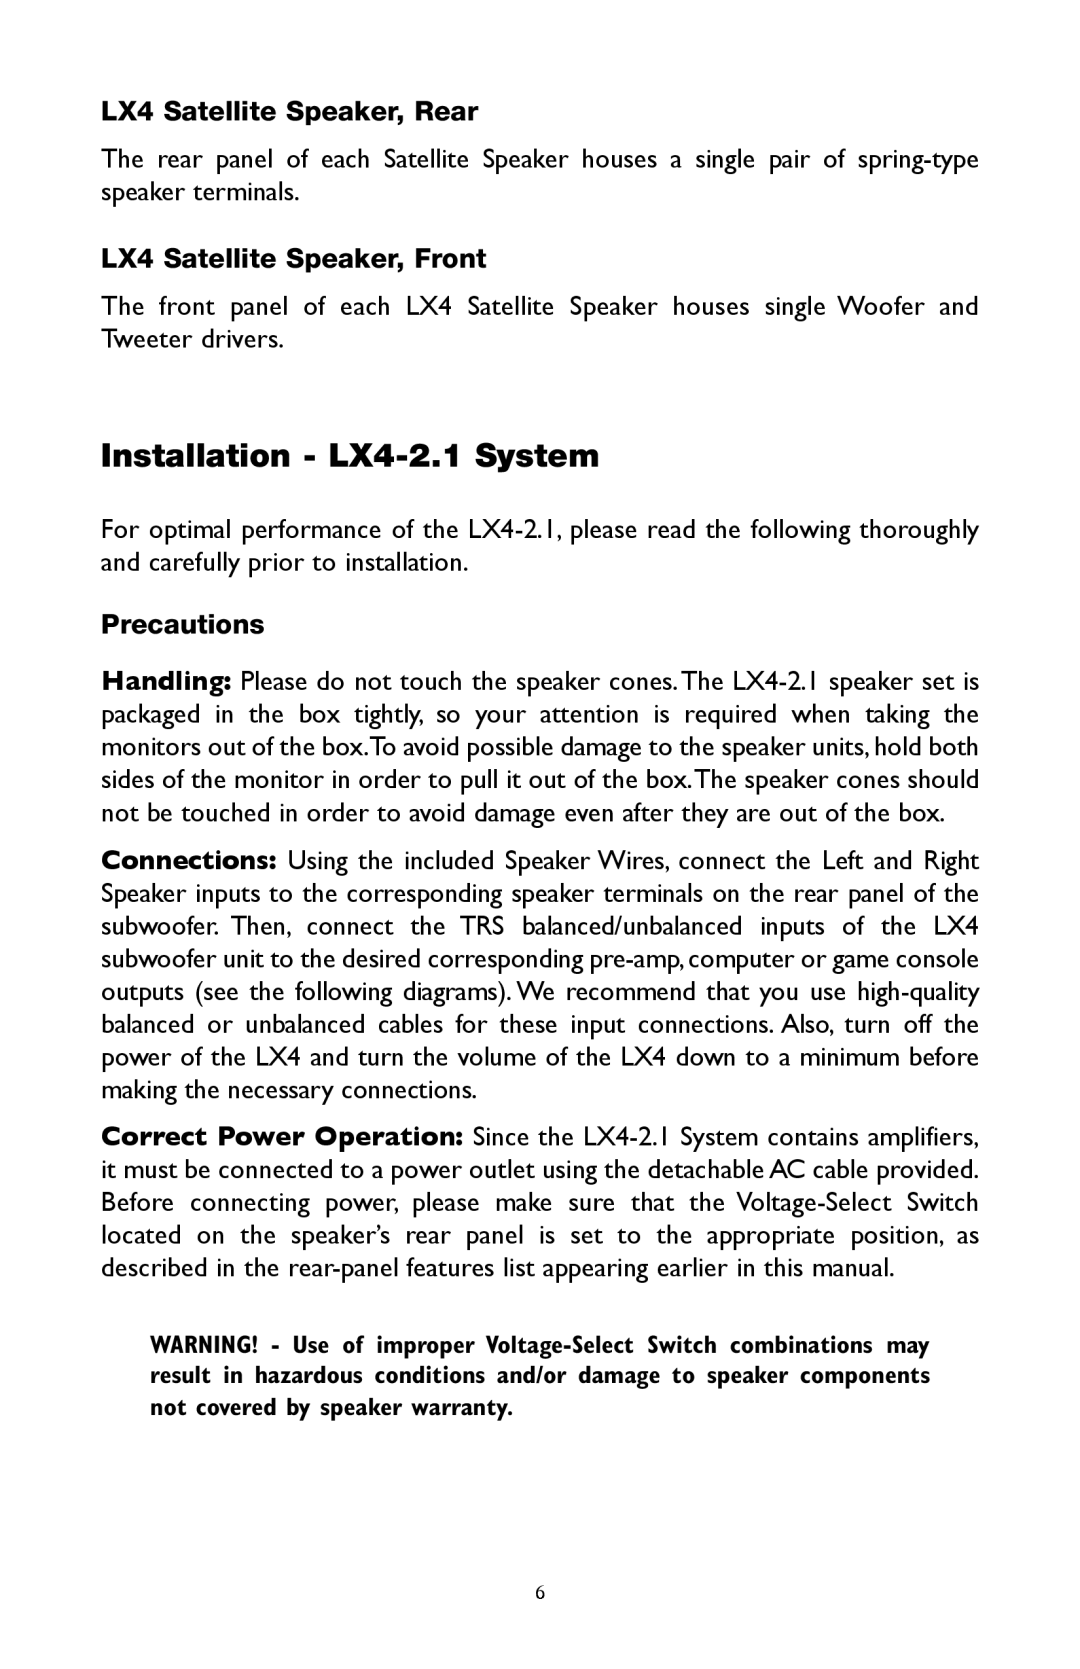 M-Audio warranty Installation - LX4-2.1System, LX4 Satellite Speaker, Rear, LX4 Satellite Speaker, Front, Precautions 